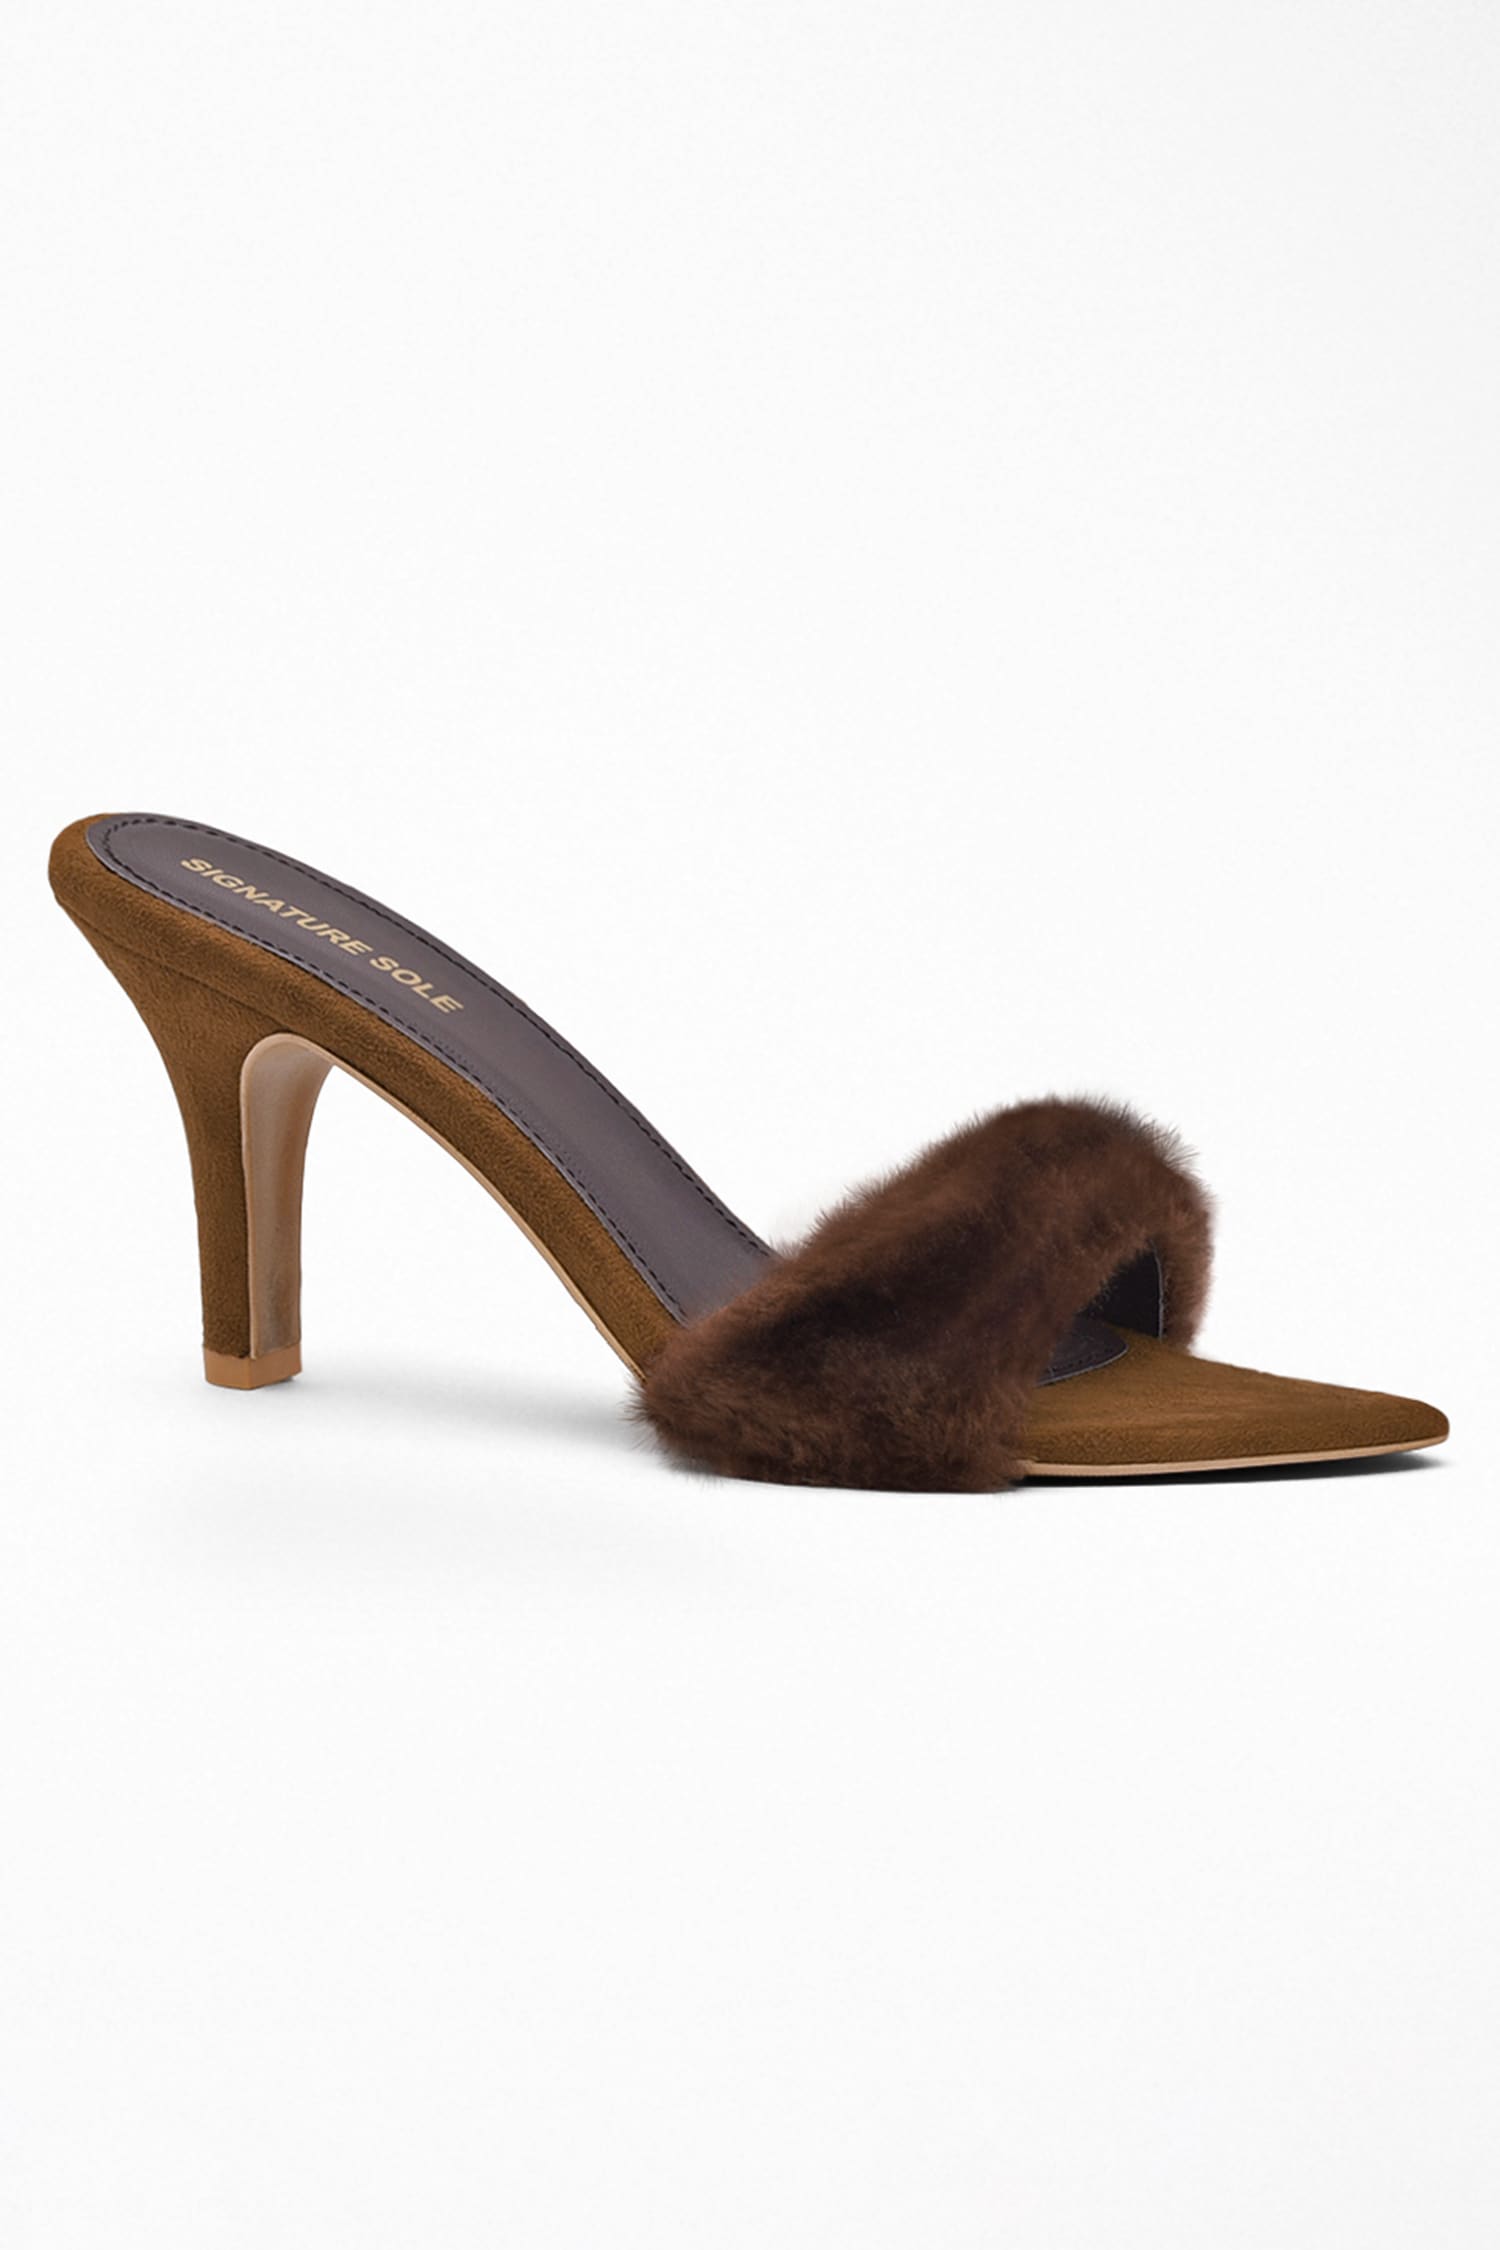 Vintage Boudoir Heel Slippers w Beautiful Black Feathers NEW & Vintage Sz  8.5 | eBay